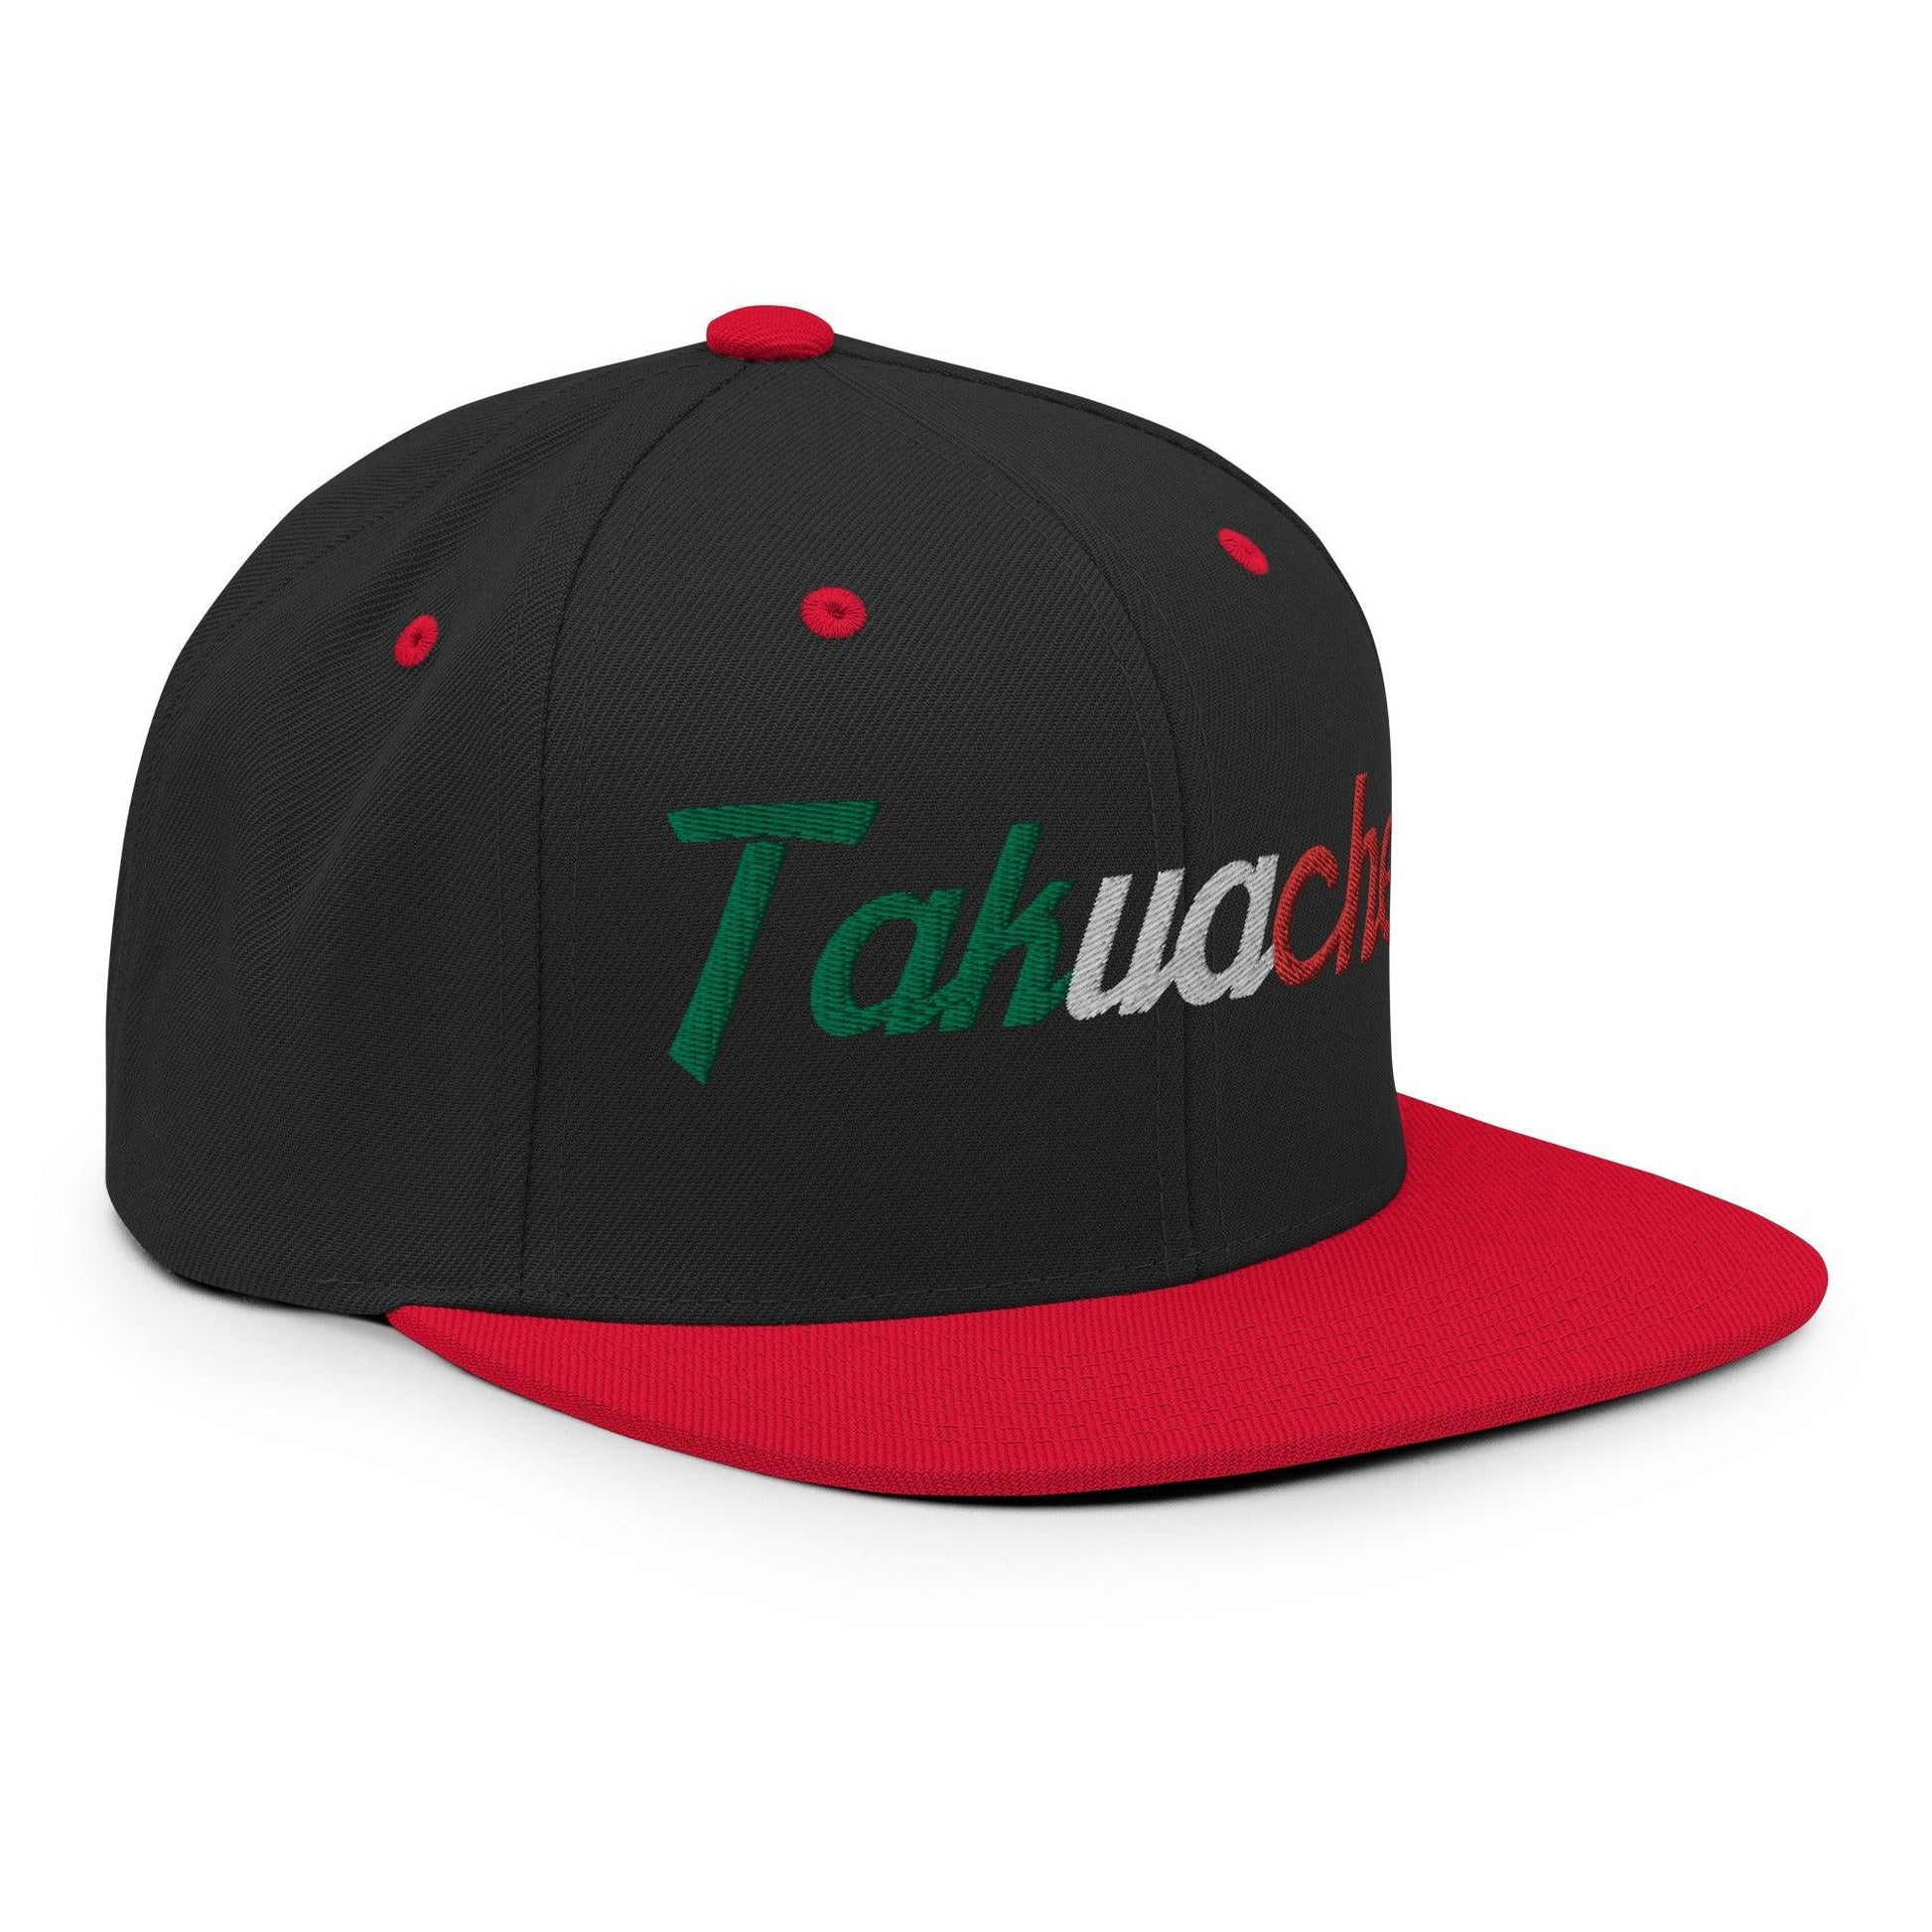 Takuache Vintage Sports Script Snapback Hat Black Red